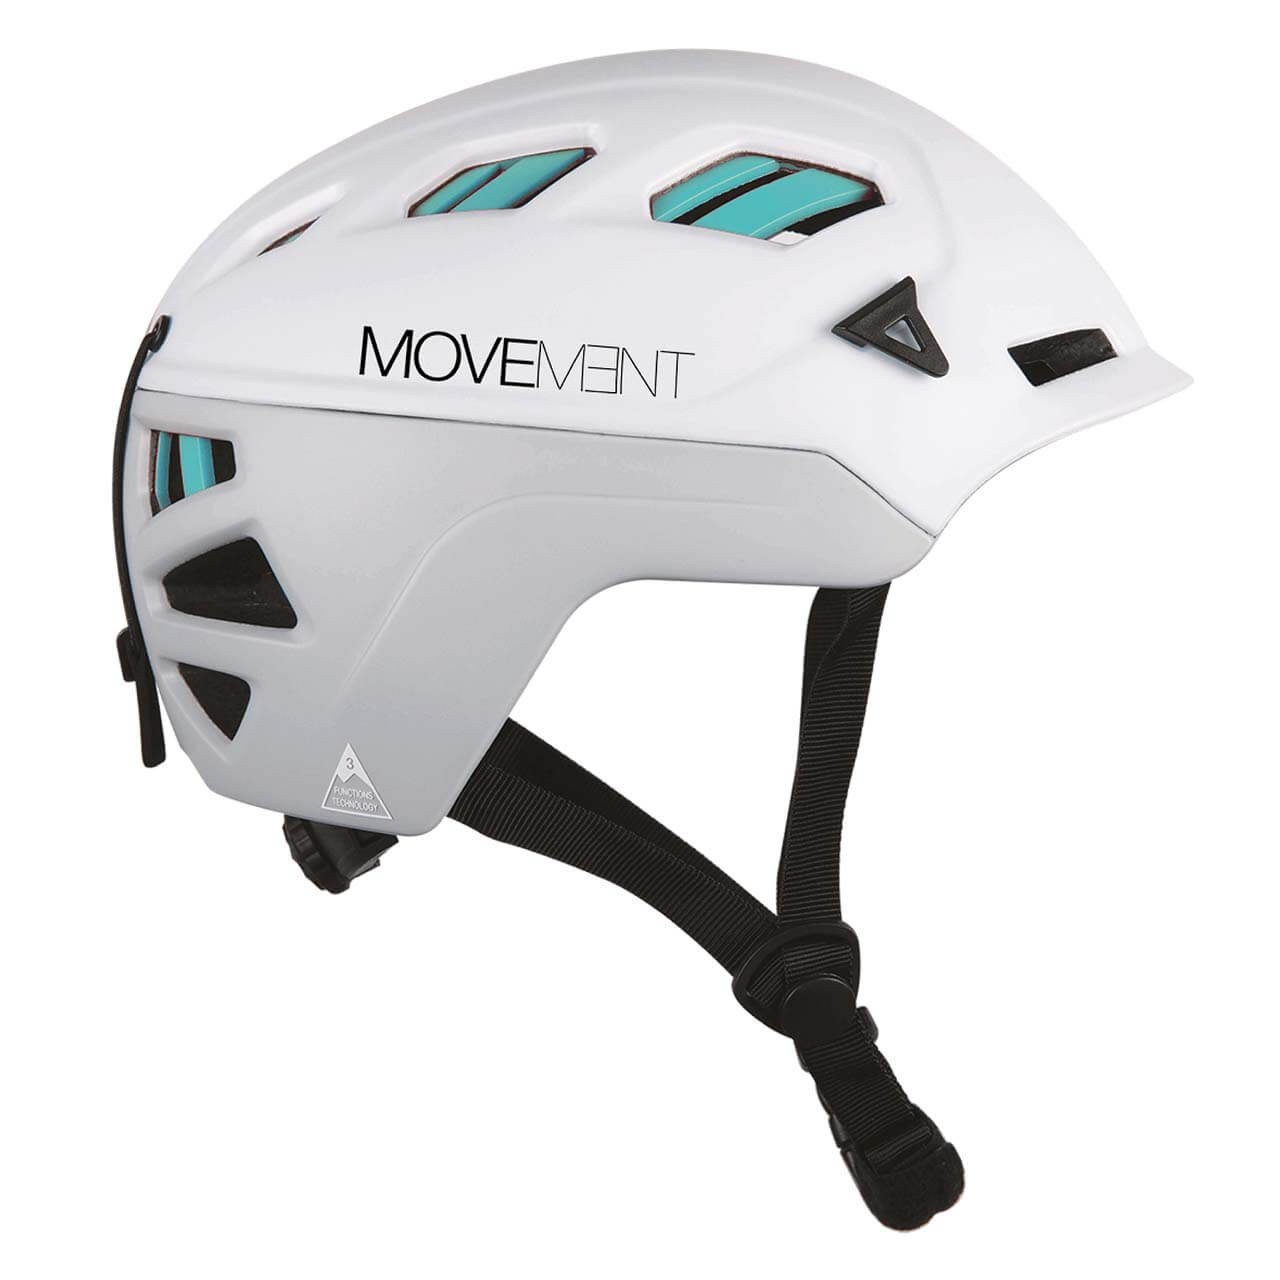 Movement Alpi Helm Women